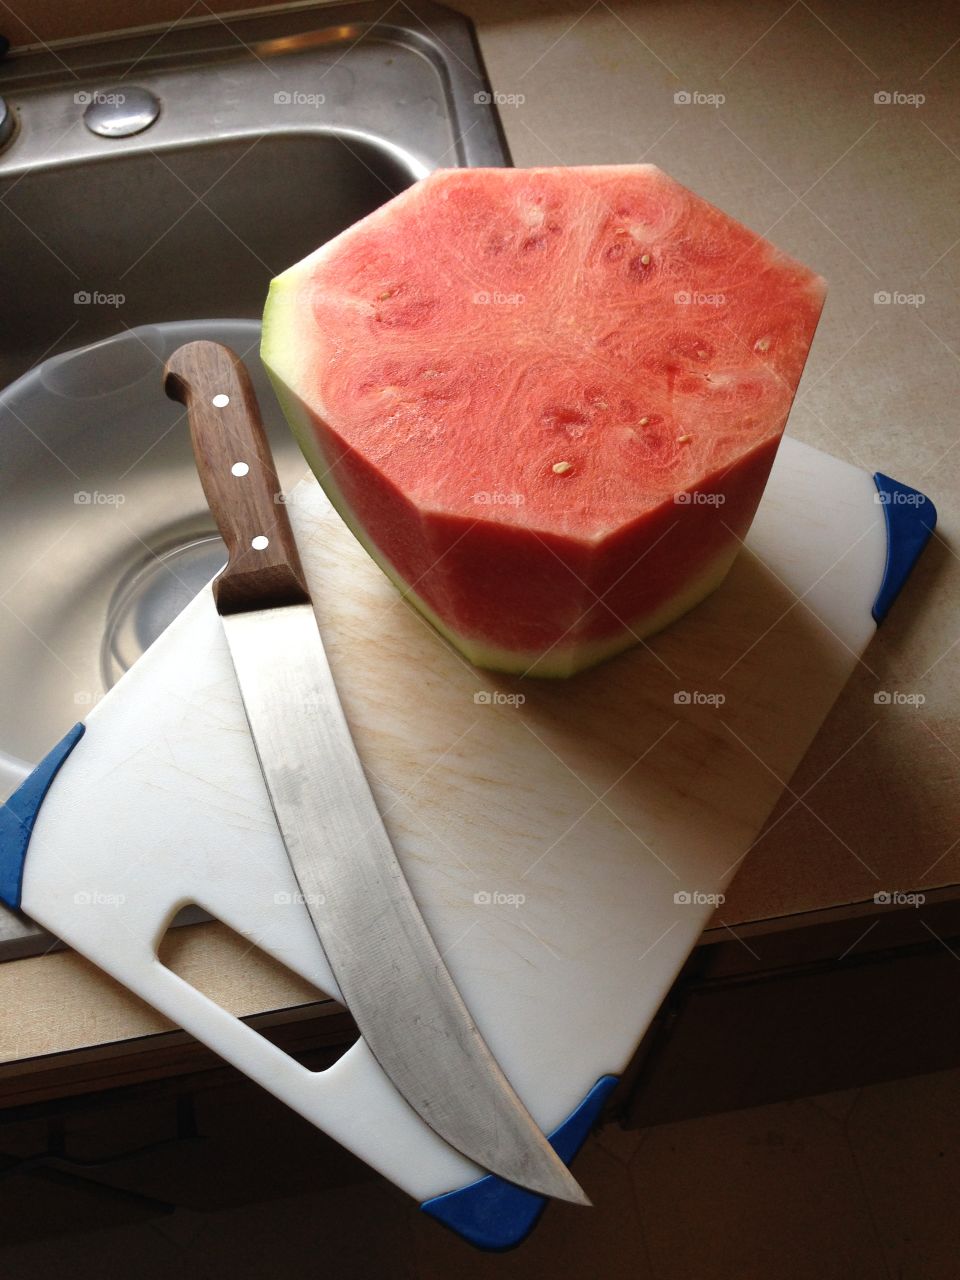 Watermelon. Watermelon cutting interrupted